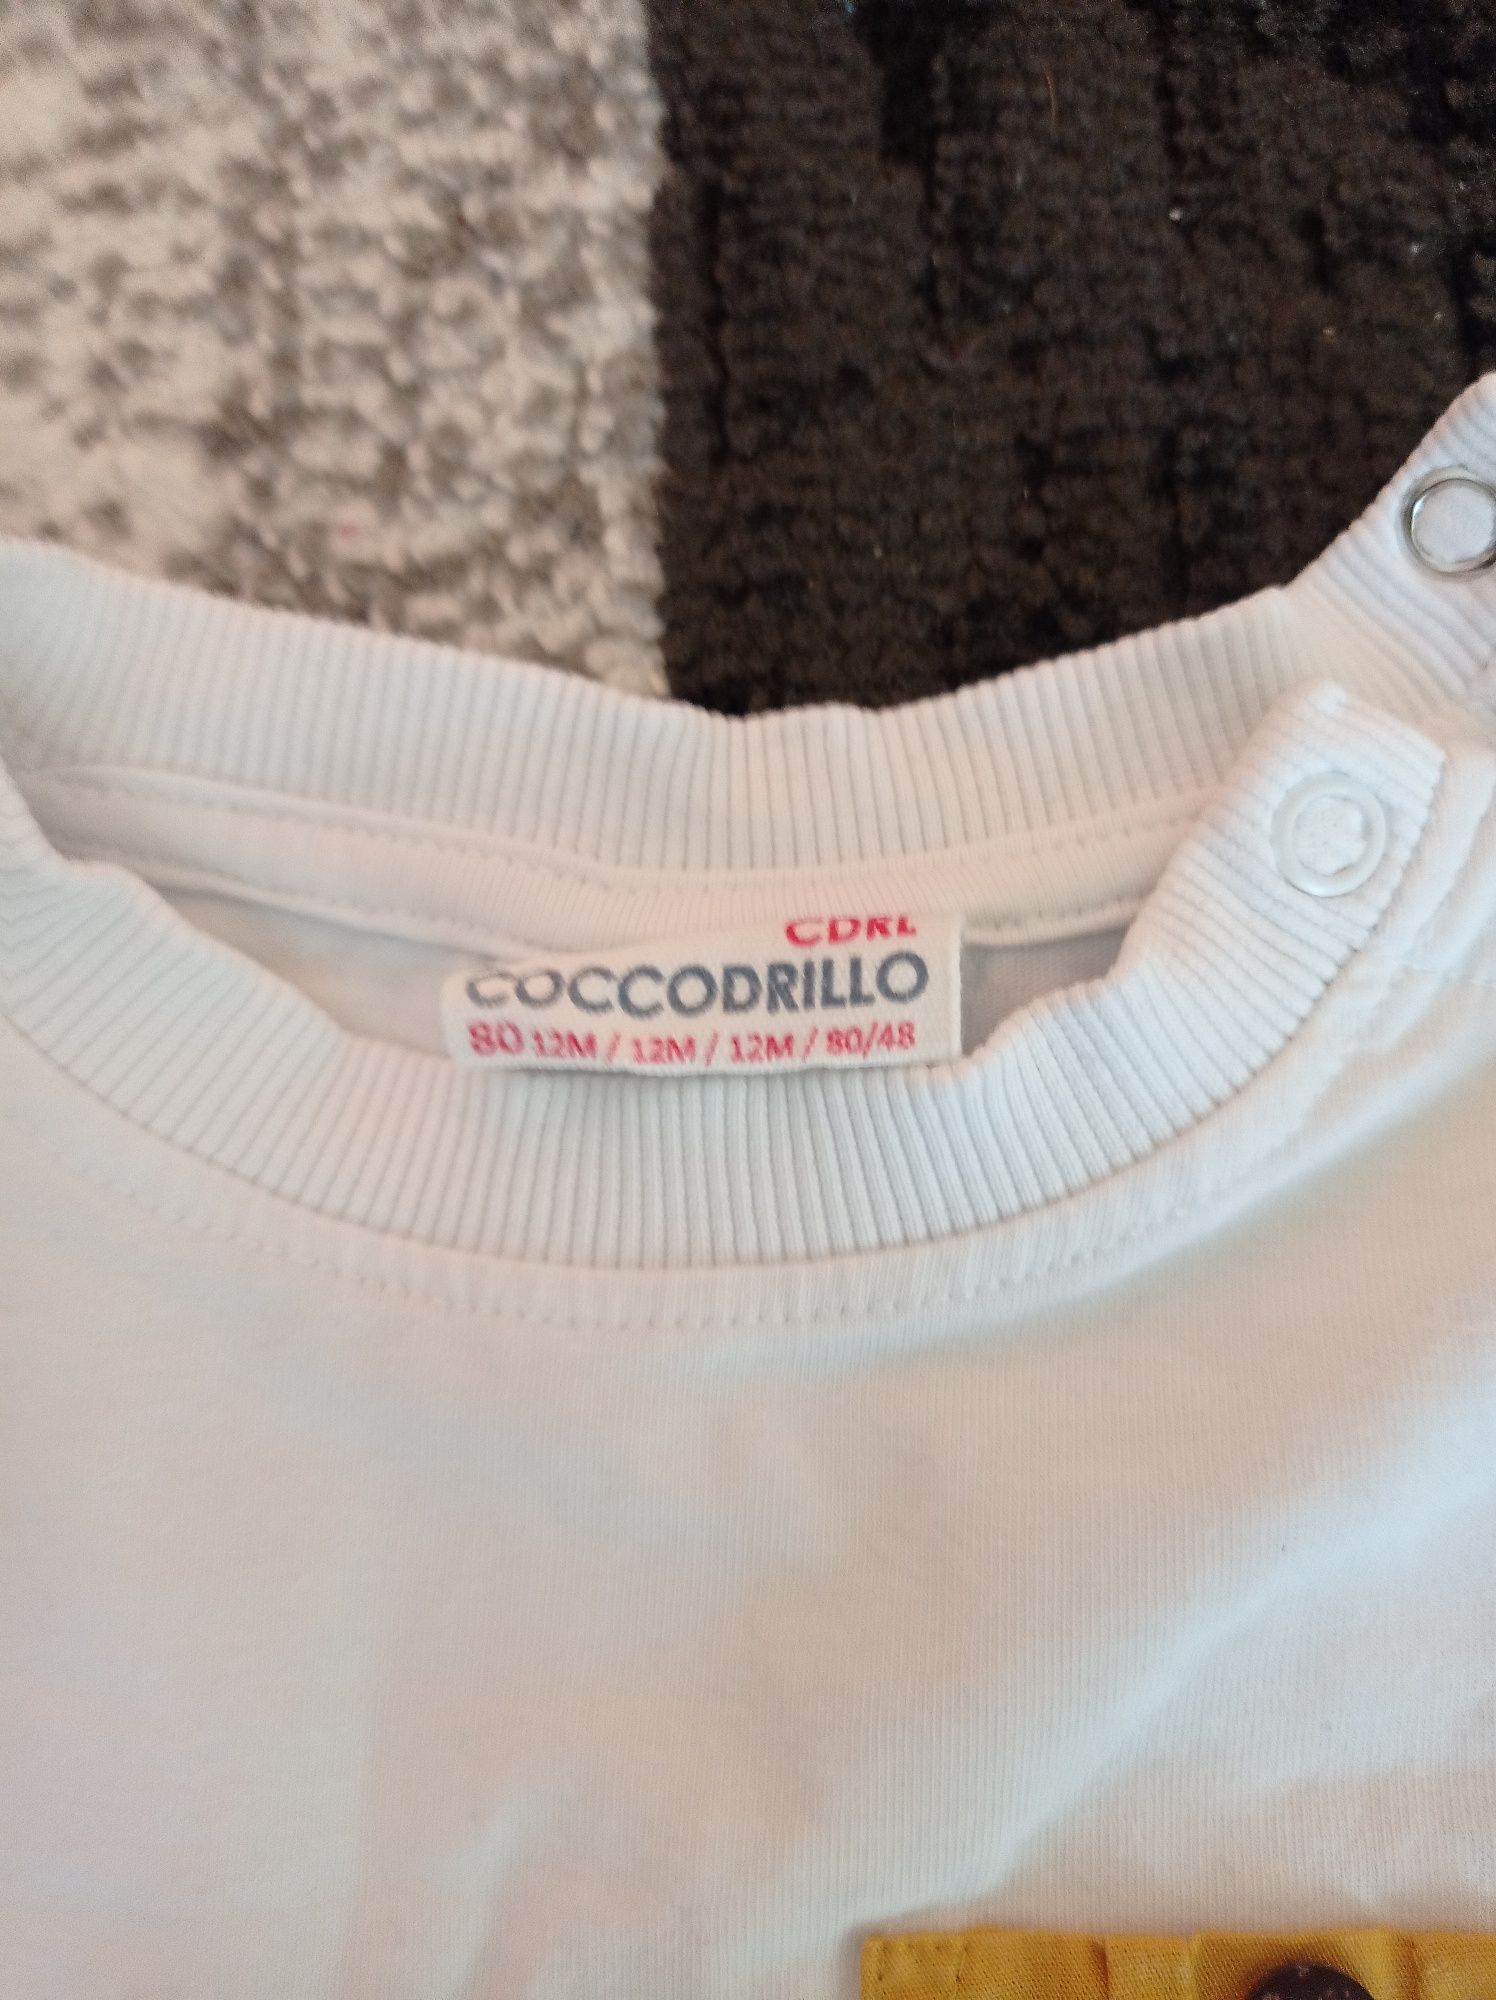 Koszulki coccodrillo 80